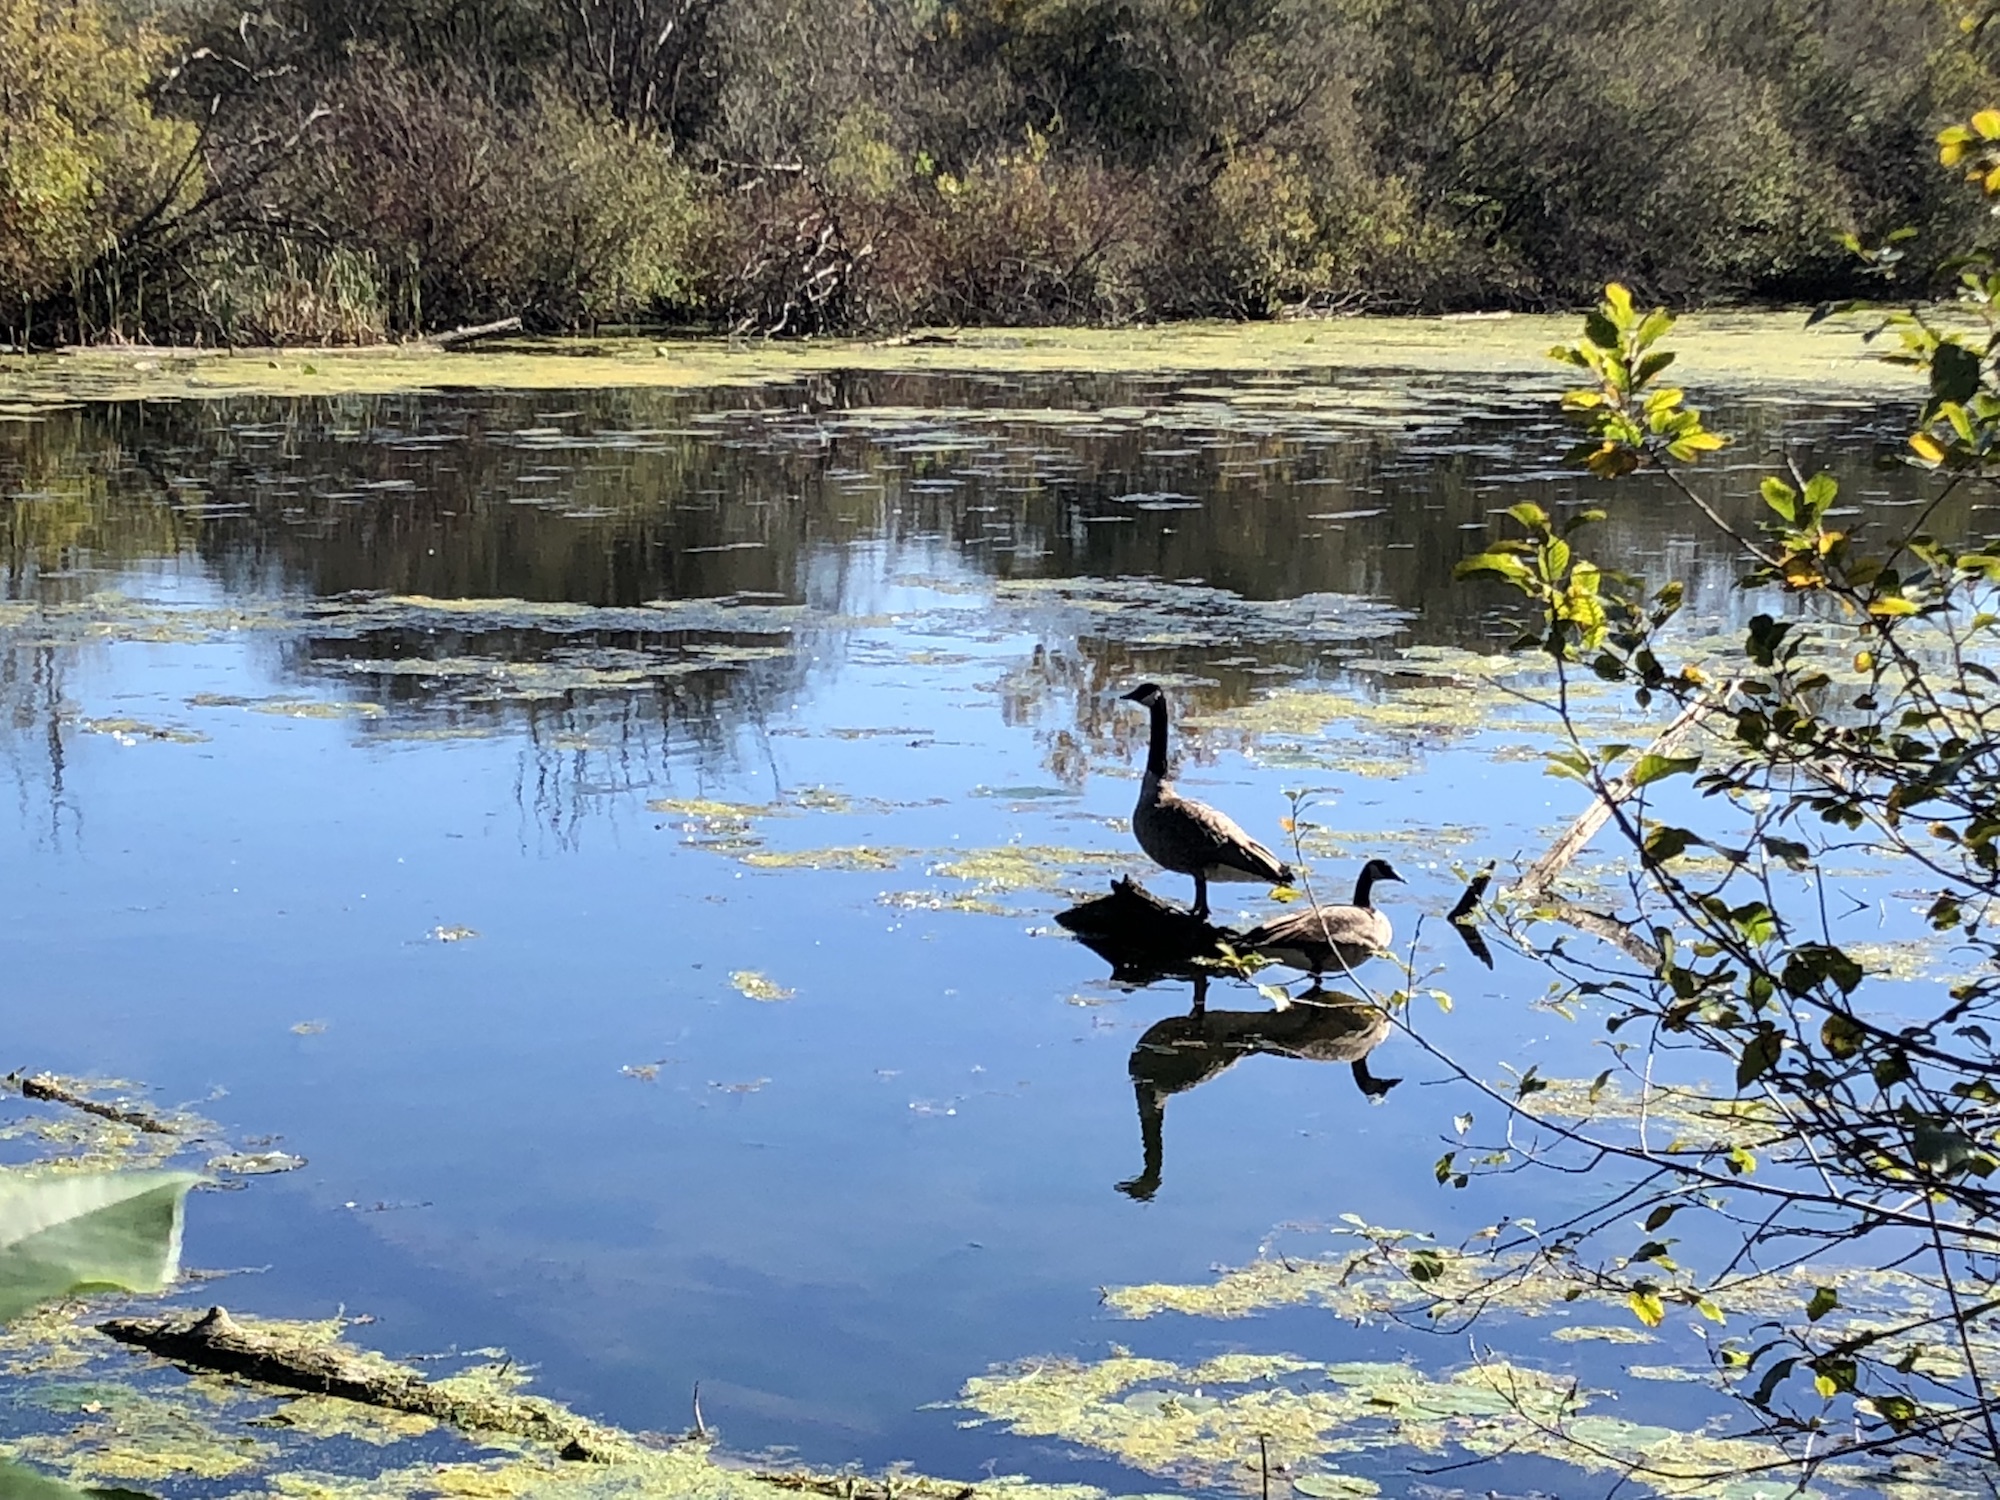 Canada Geese in Ho-Nee-Um Pond in the UW Arboretum on October 4, 2018.